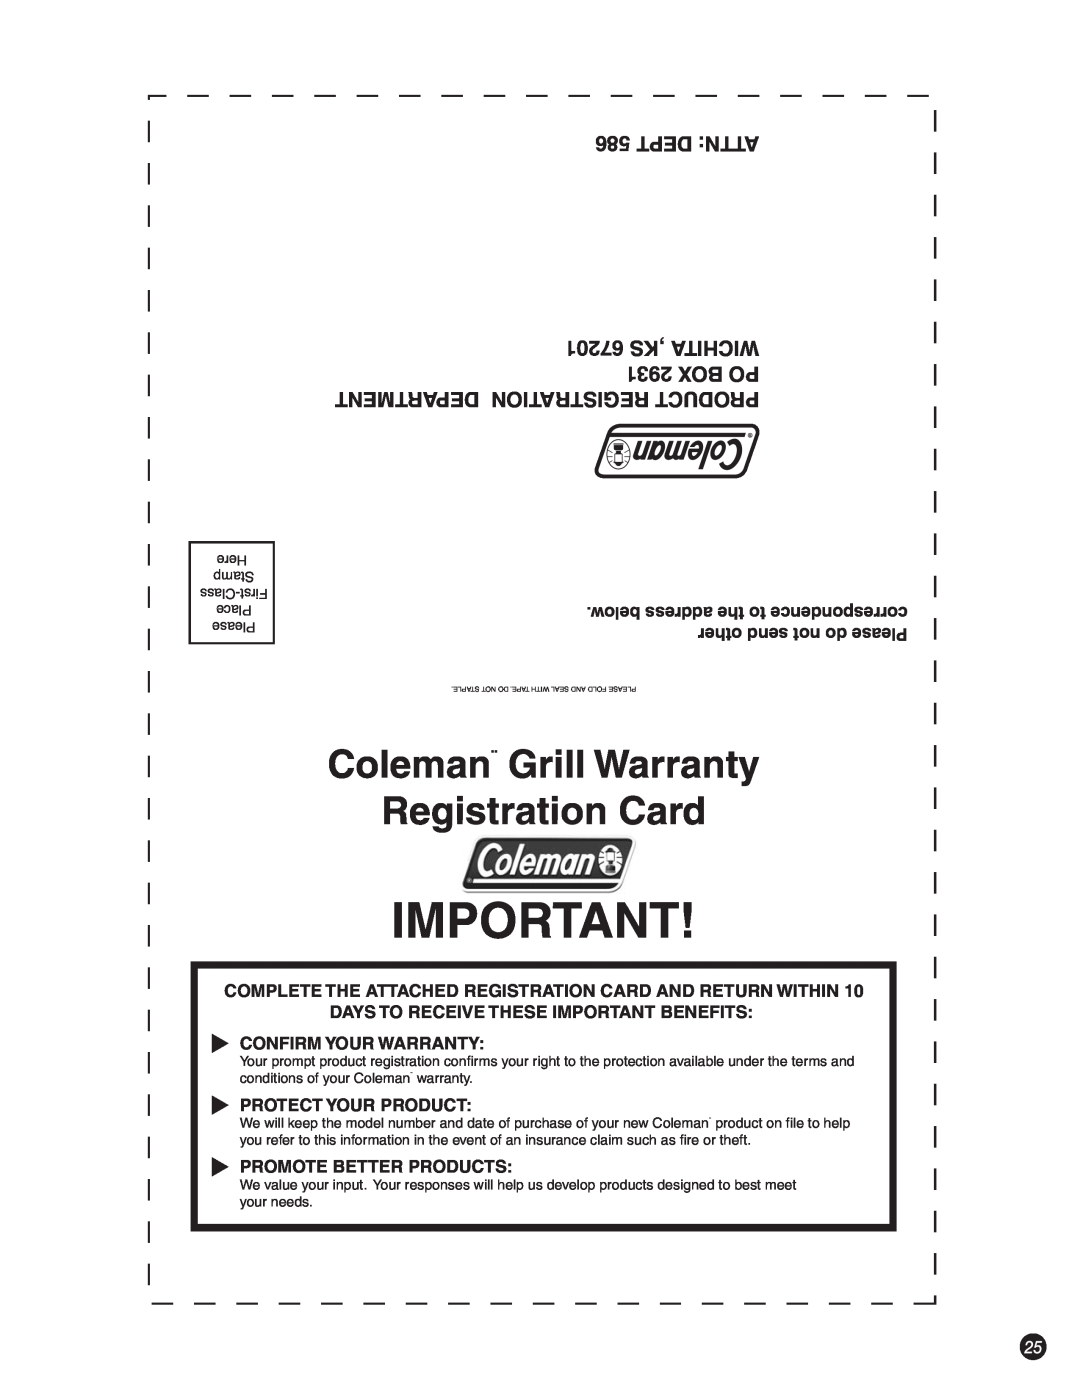 Coleman 8450 Series, 9992-649 manual Dept Attn, 67201 ,KS WICHITA 2931 BOX PO DEPARTMENT REGISTRATION PRODUCT 